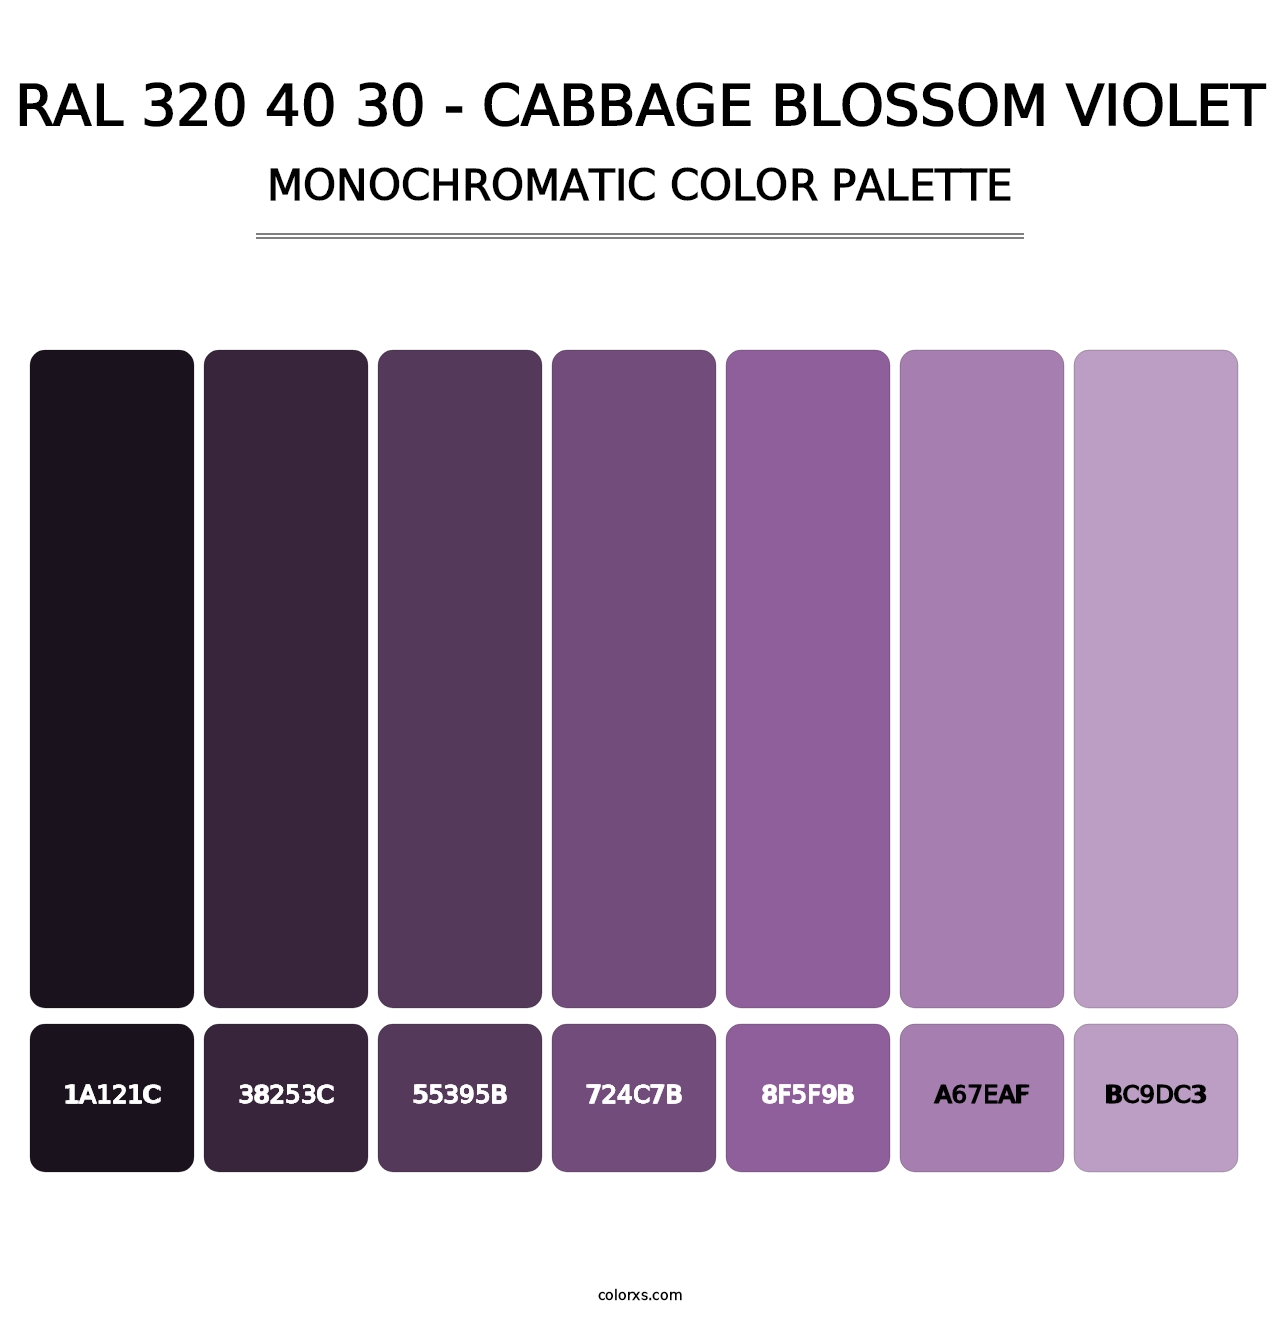 RAL 320 40 30 - Cabbage Blossom Violet - Monochromatic Color Palette